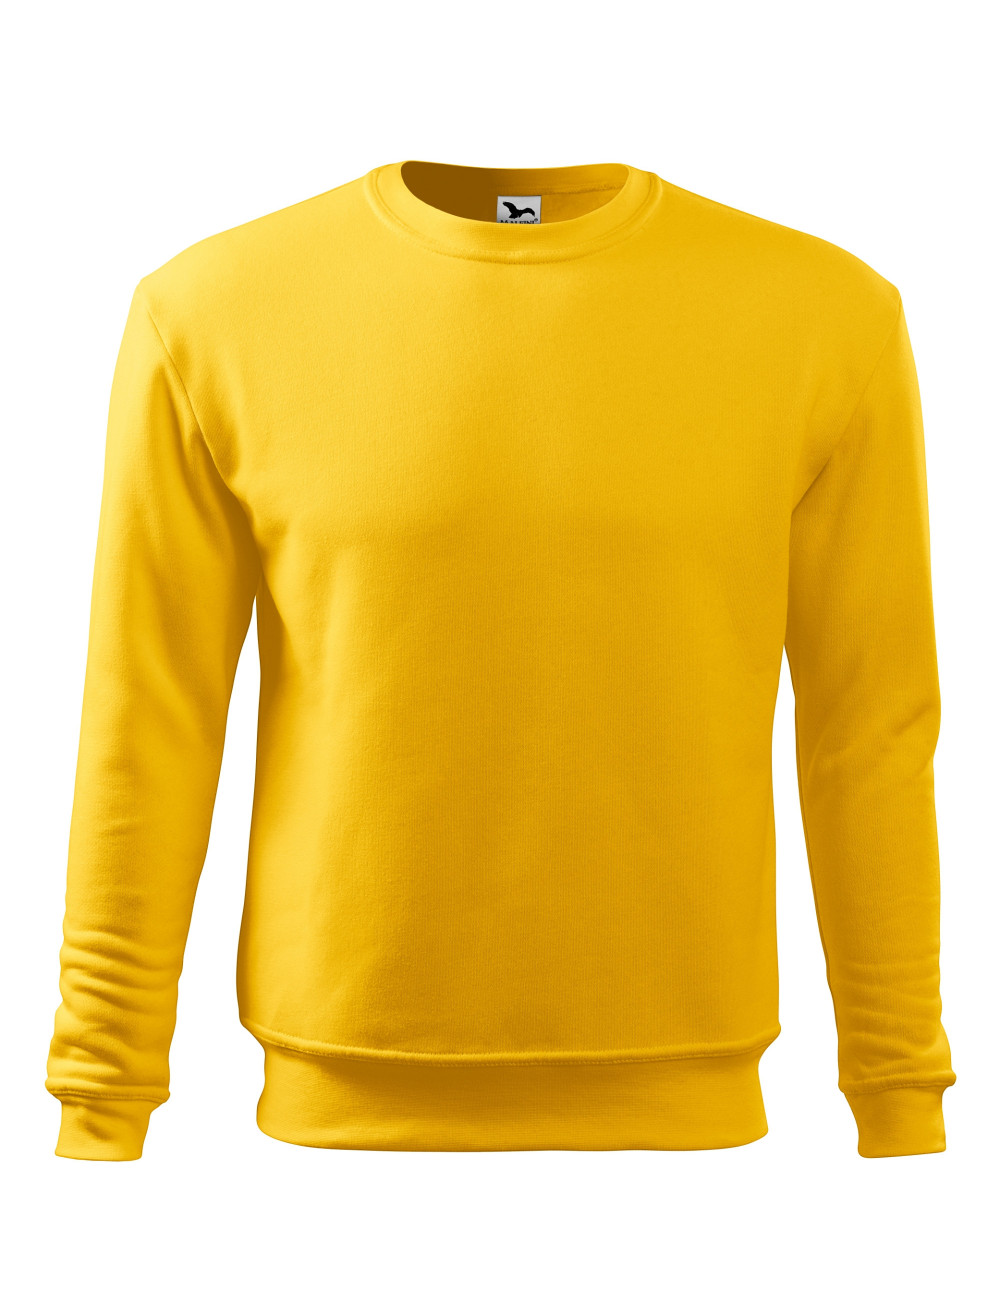 Men`s/children`s sweatshirt essential 406 yellow Adler Malfini®